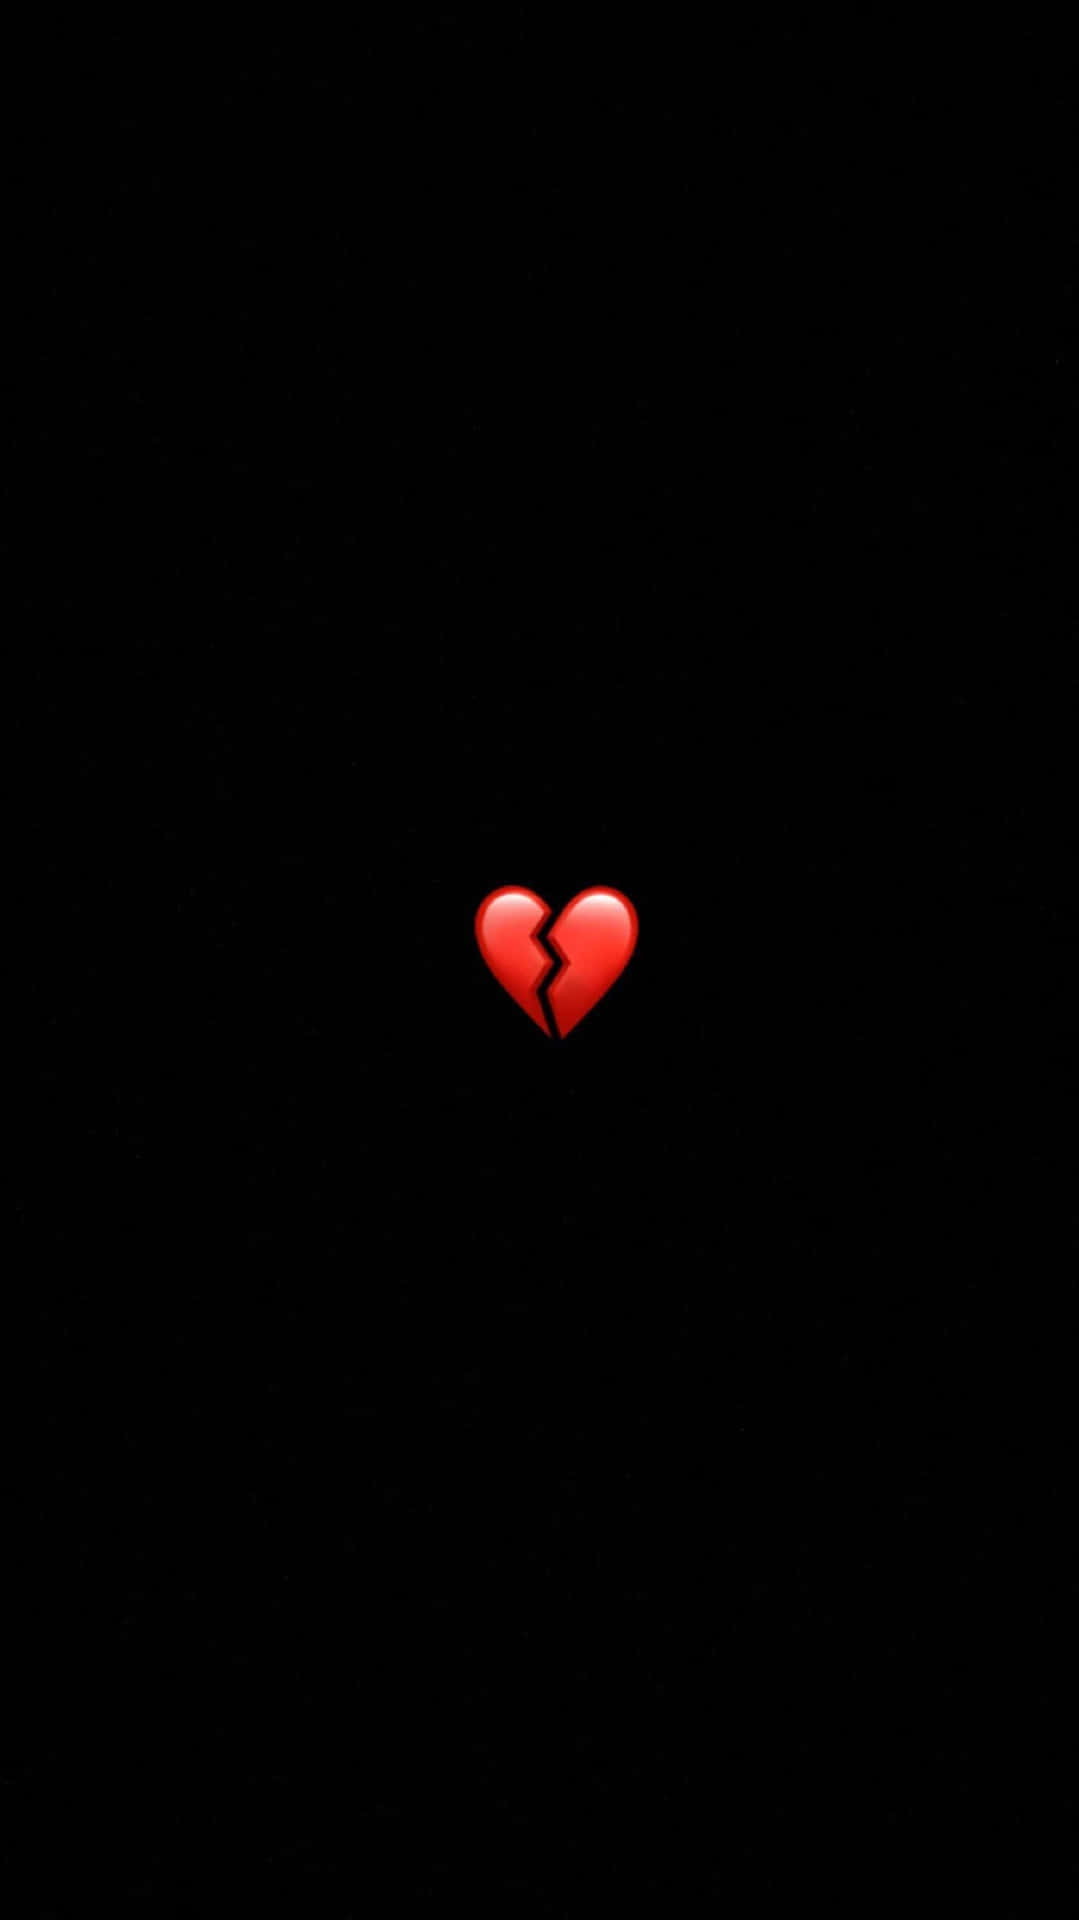 Broken Heart Emoji Dark Background Wallpaper